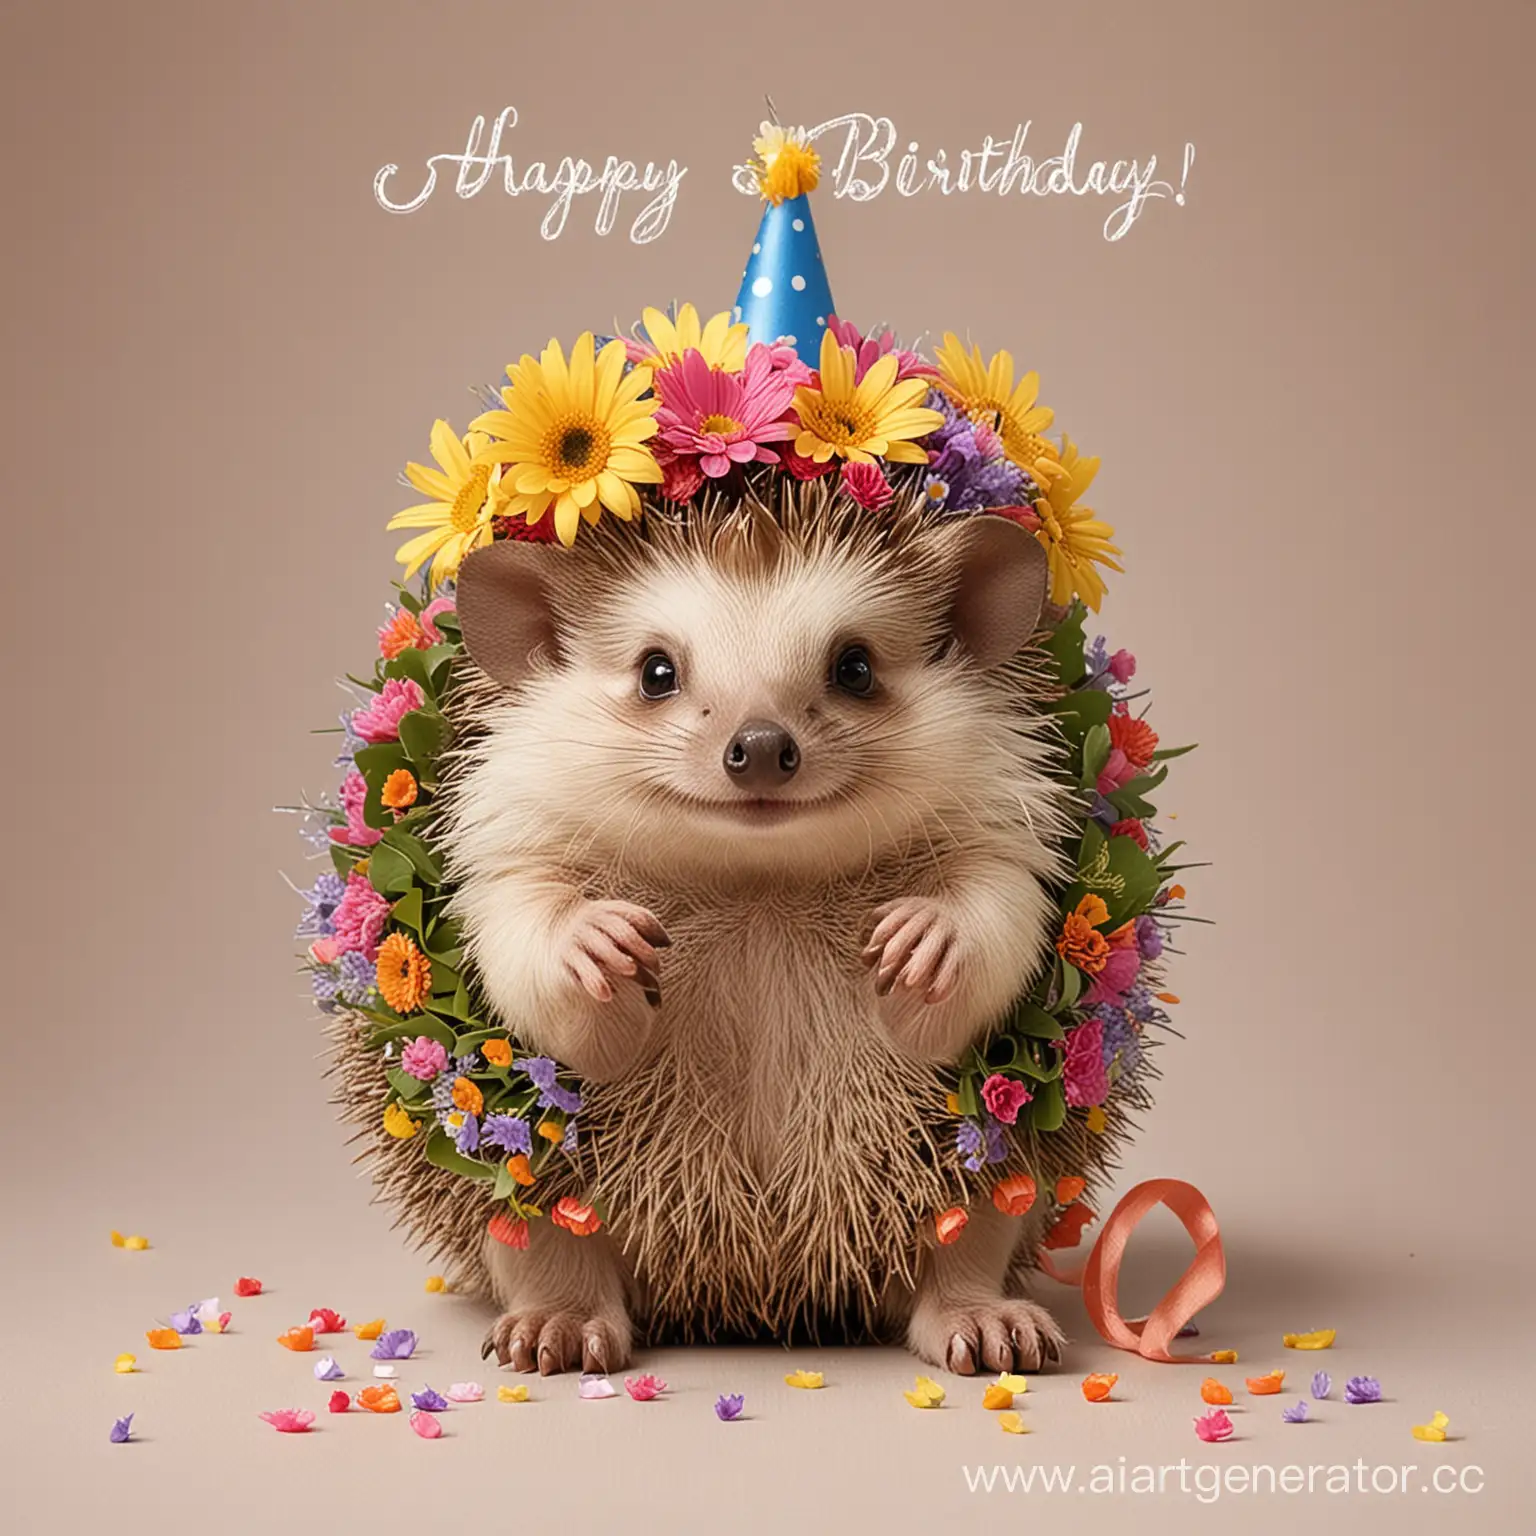 Adorable-Hedgehog-Holding-Bouquet-Wishing-Happy-Birthday